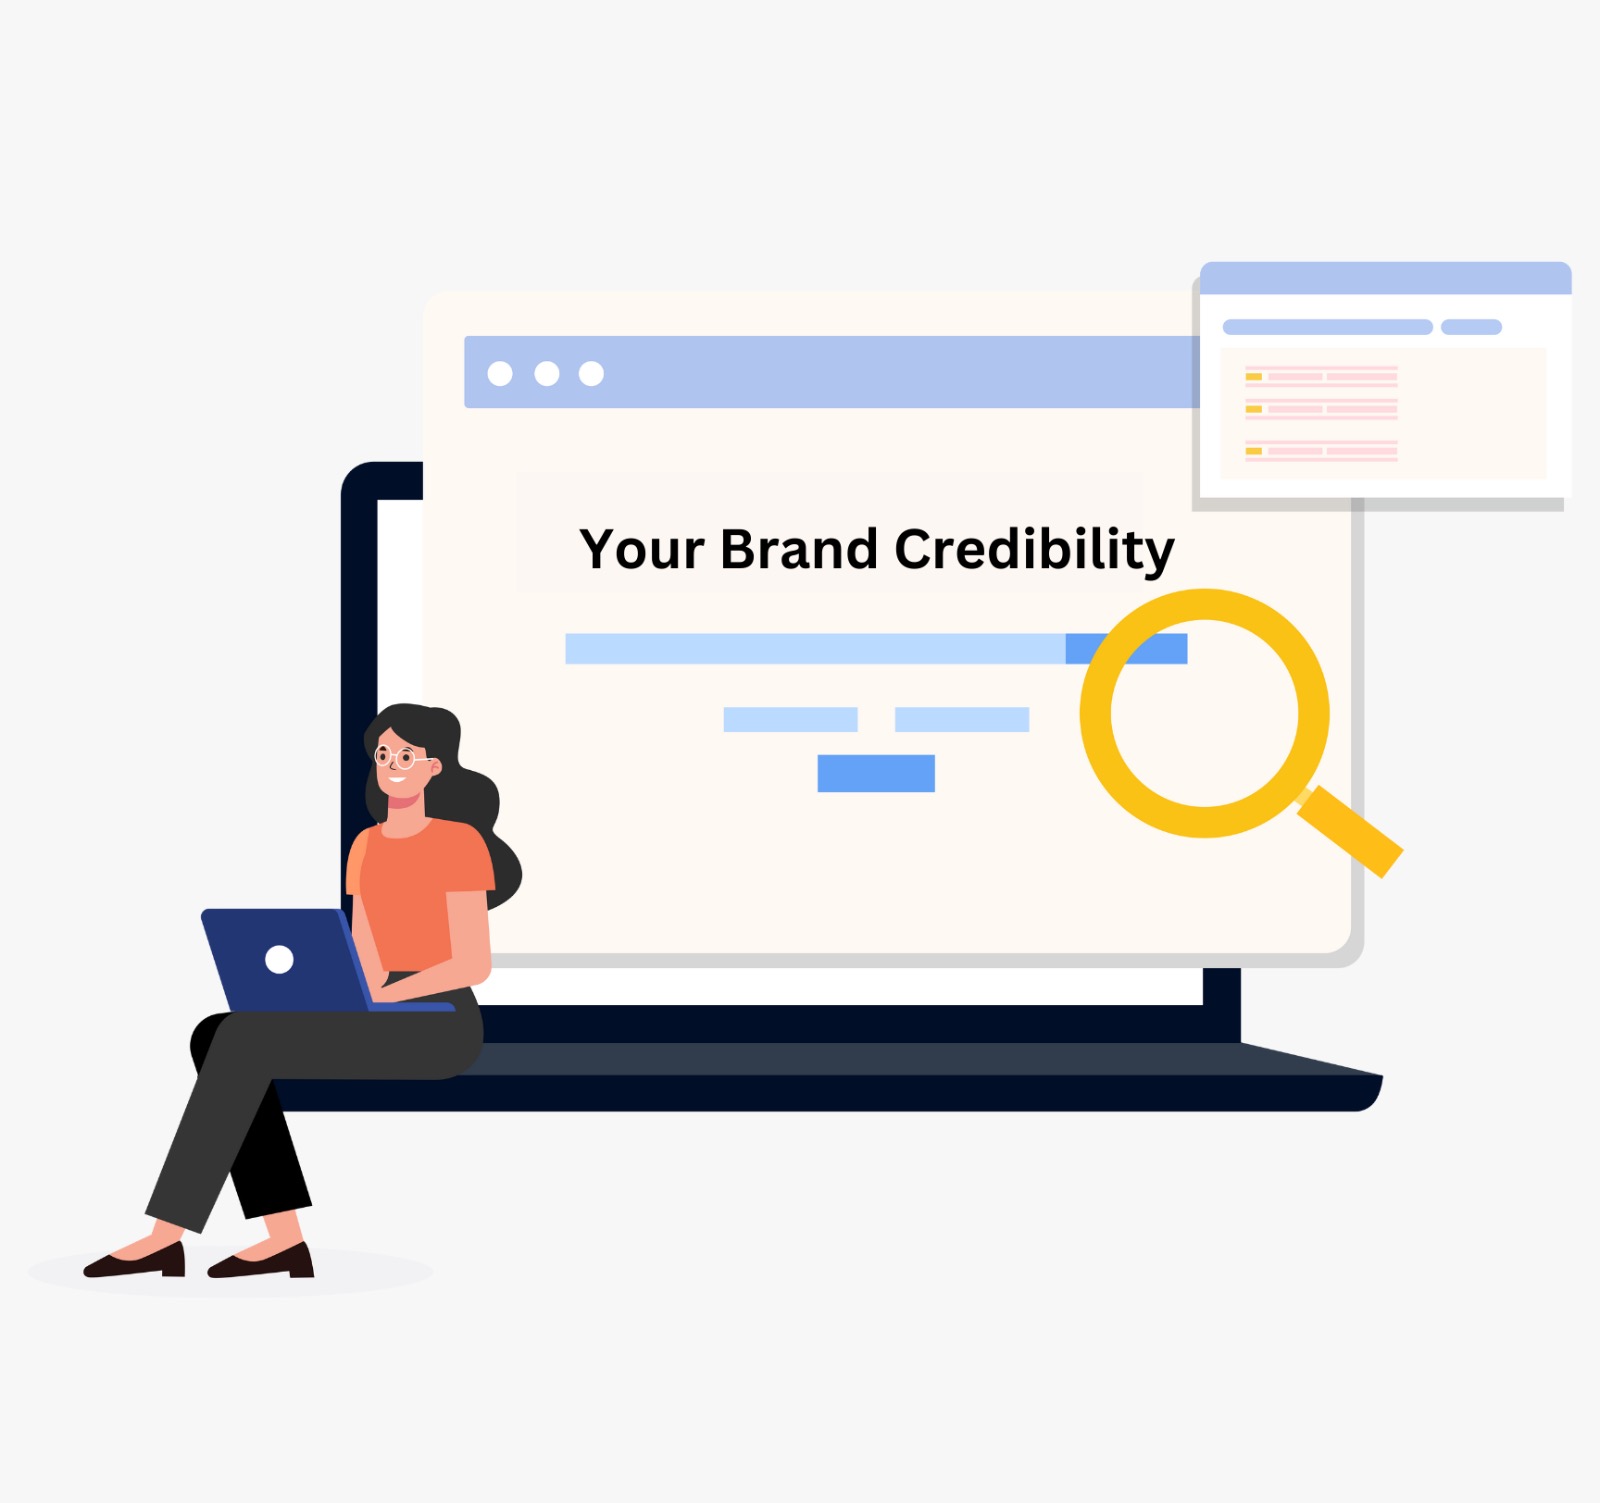 Enhanced Brand Credibility technifirm